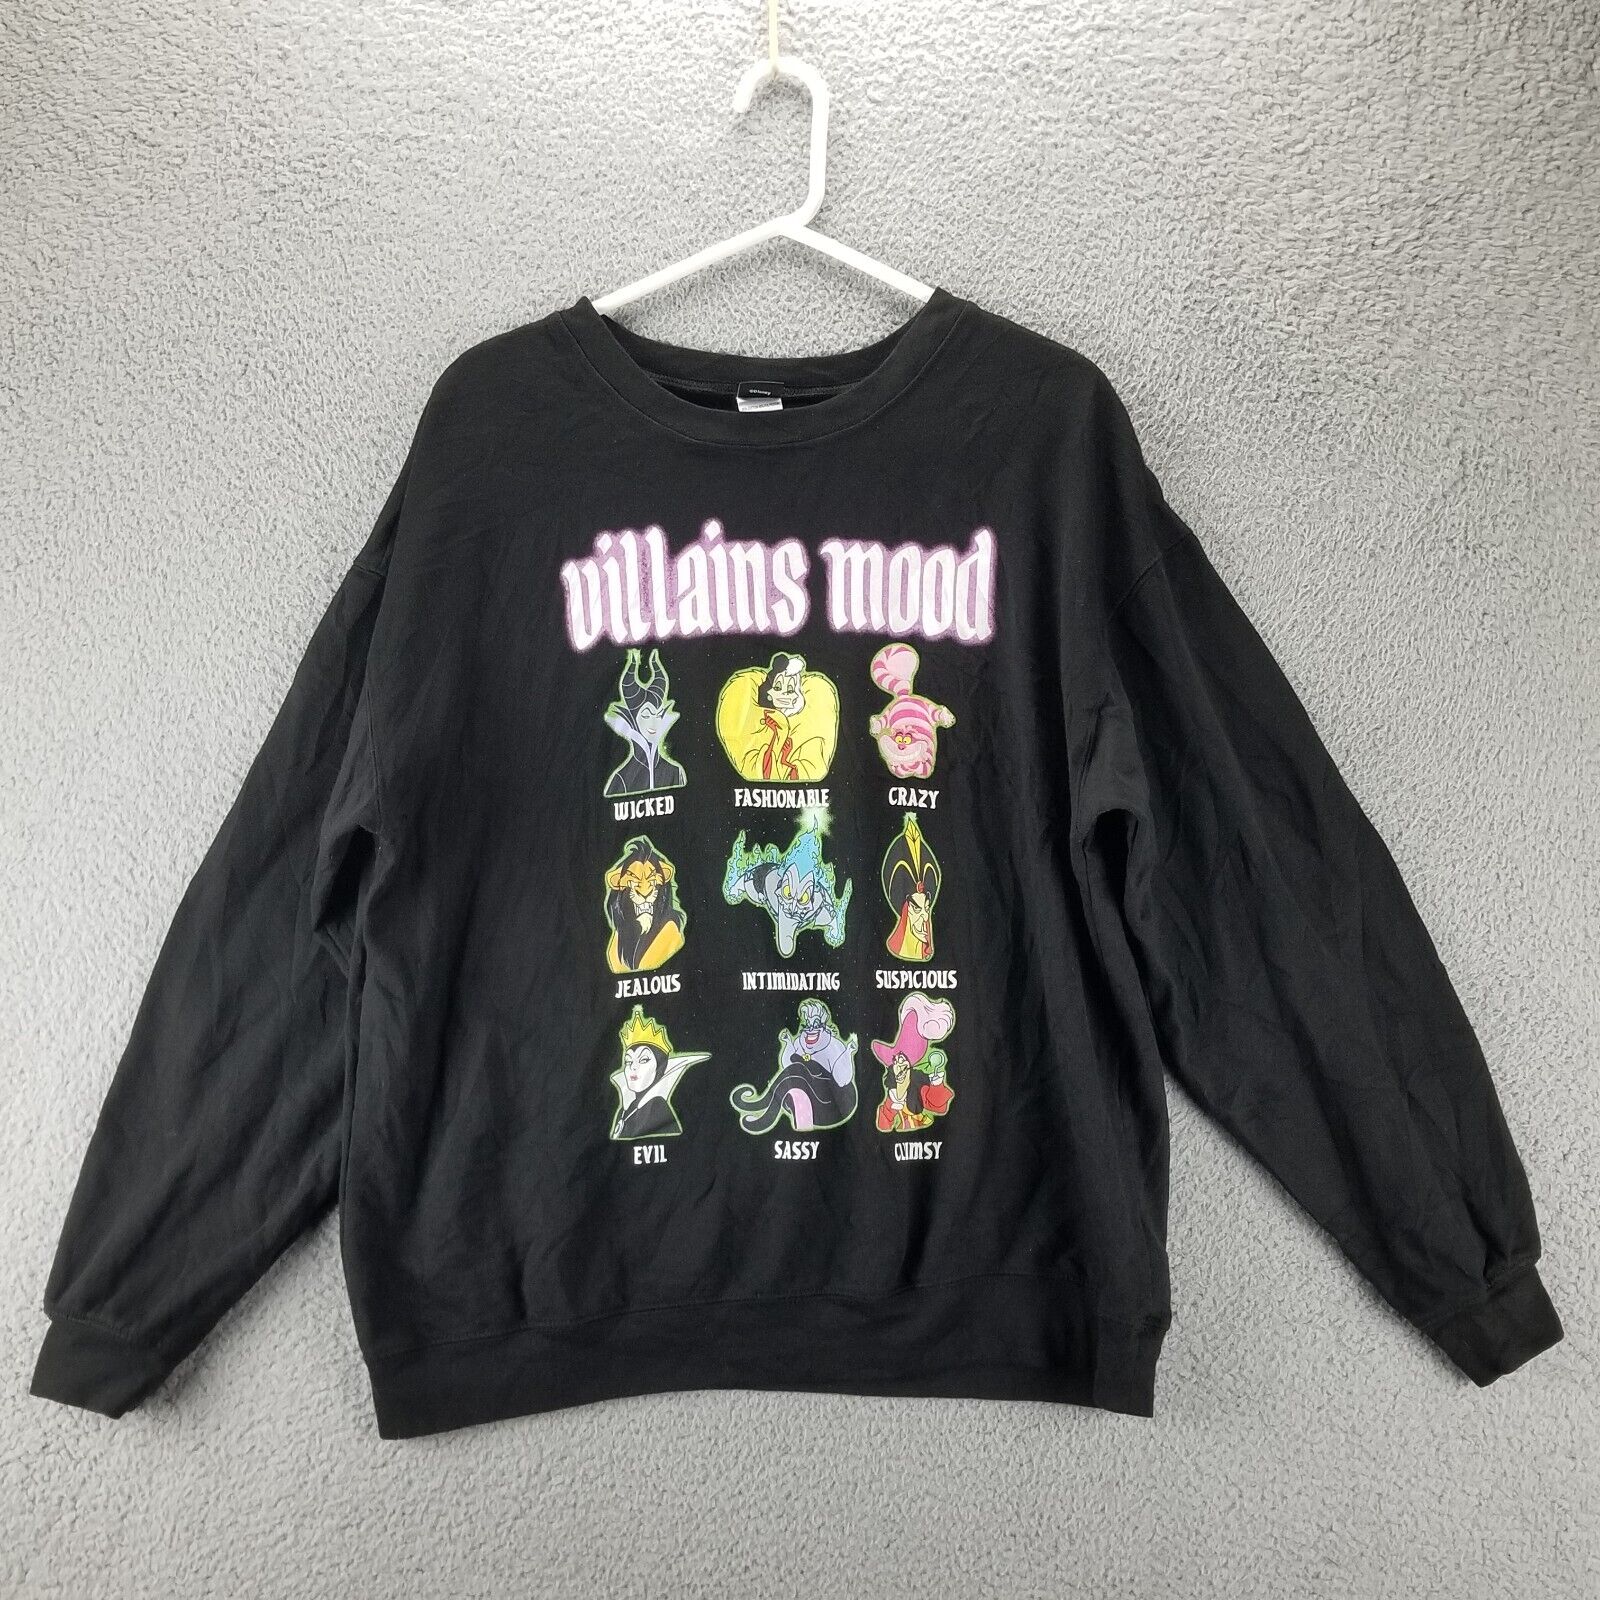 Disney Villains Womens Sweatshirt Size XXL 19 Villians Mood Black 2X Plus Size